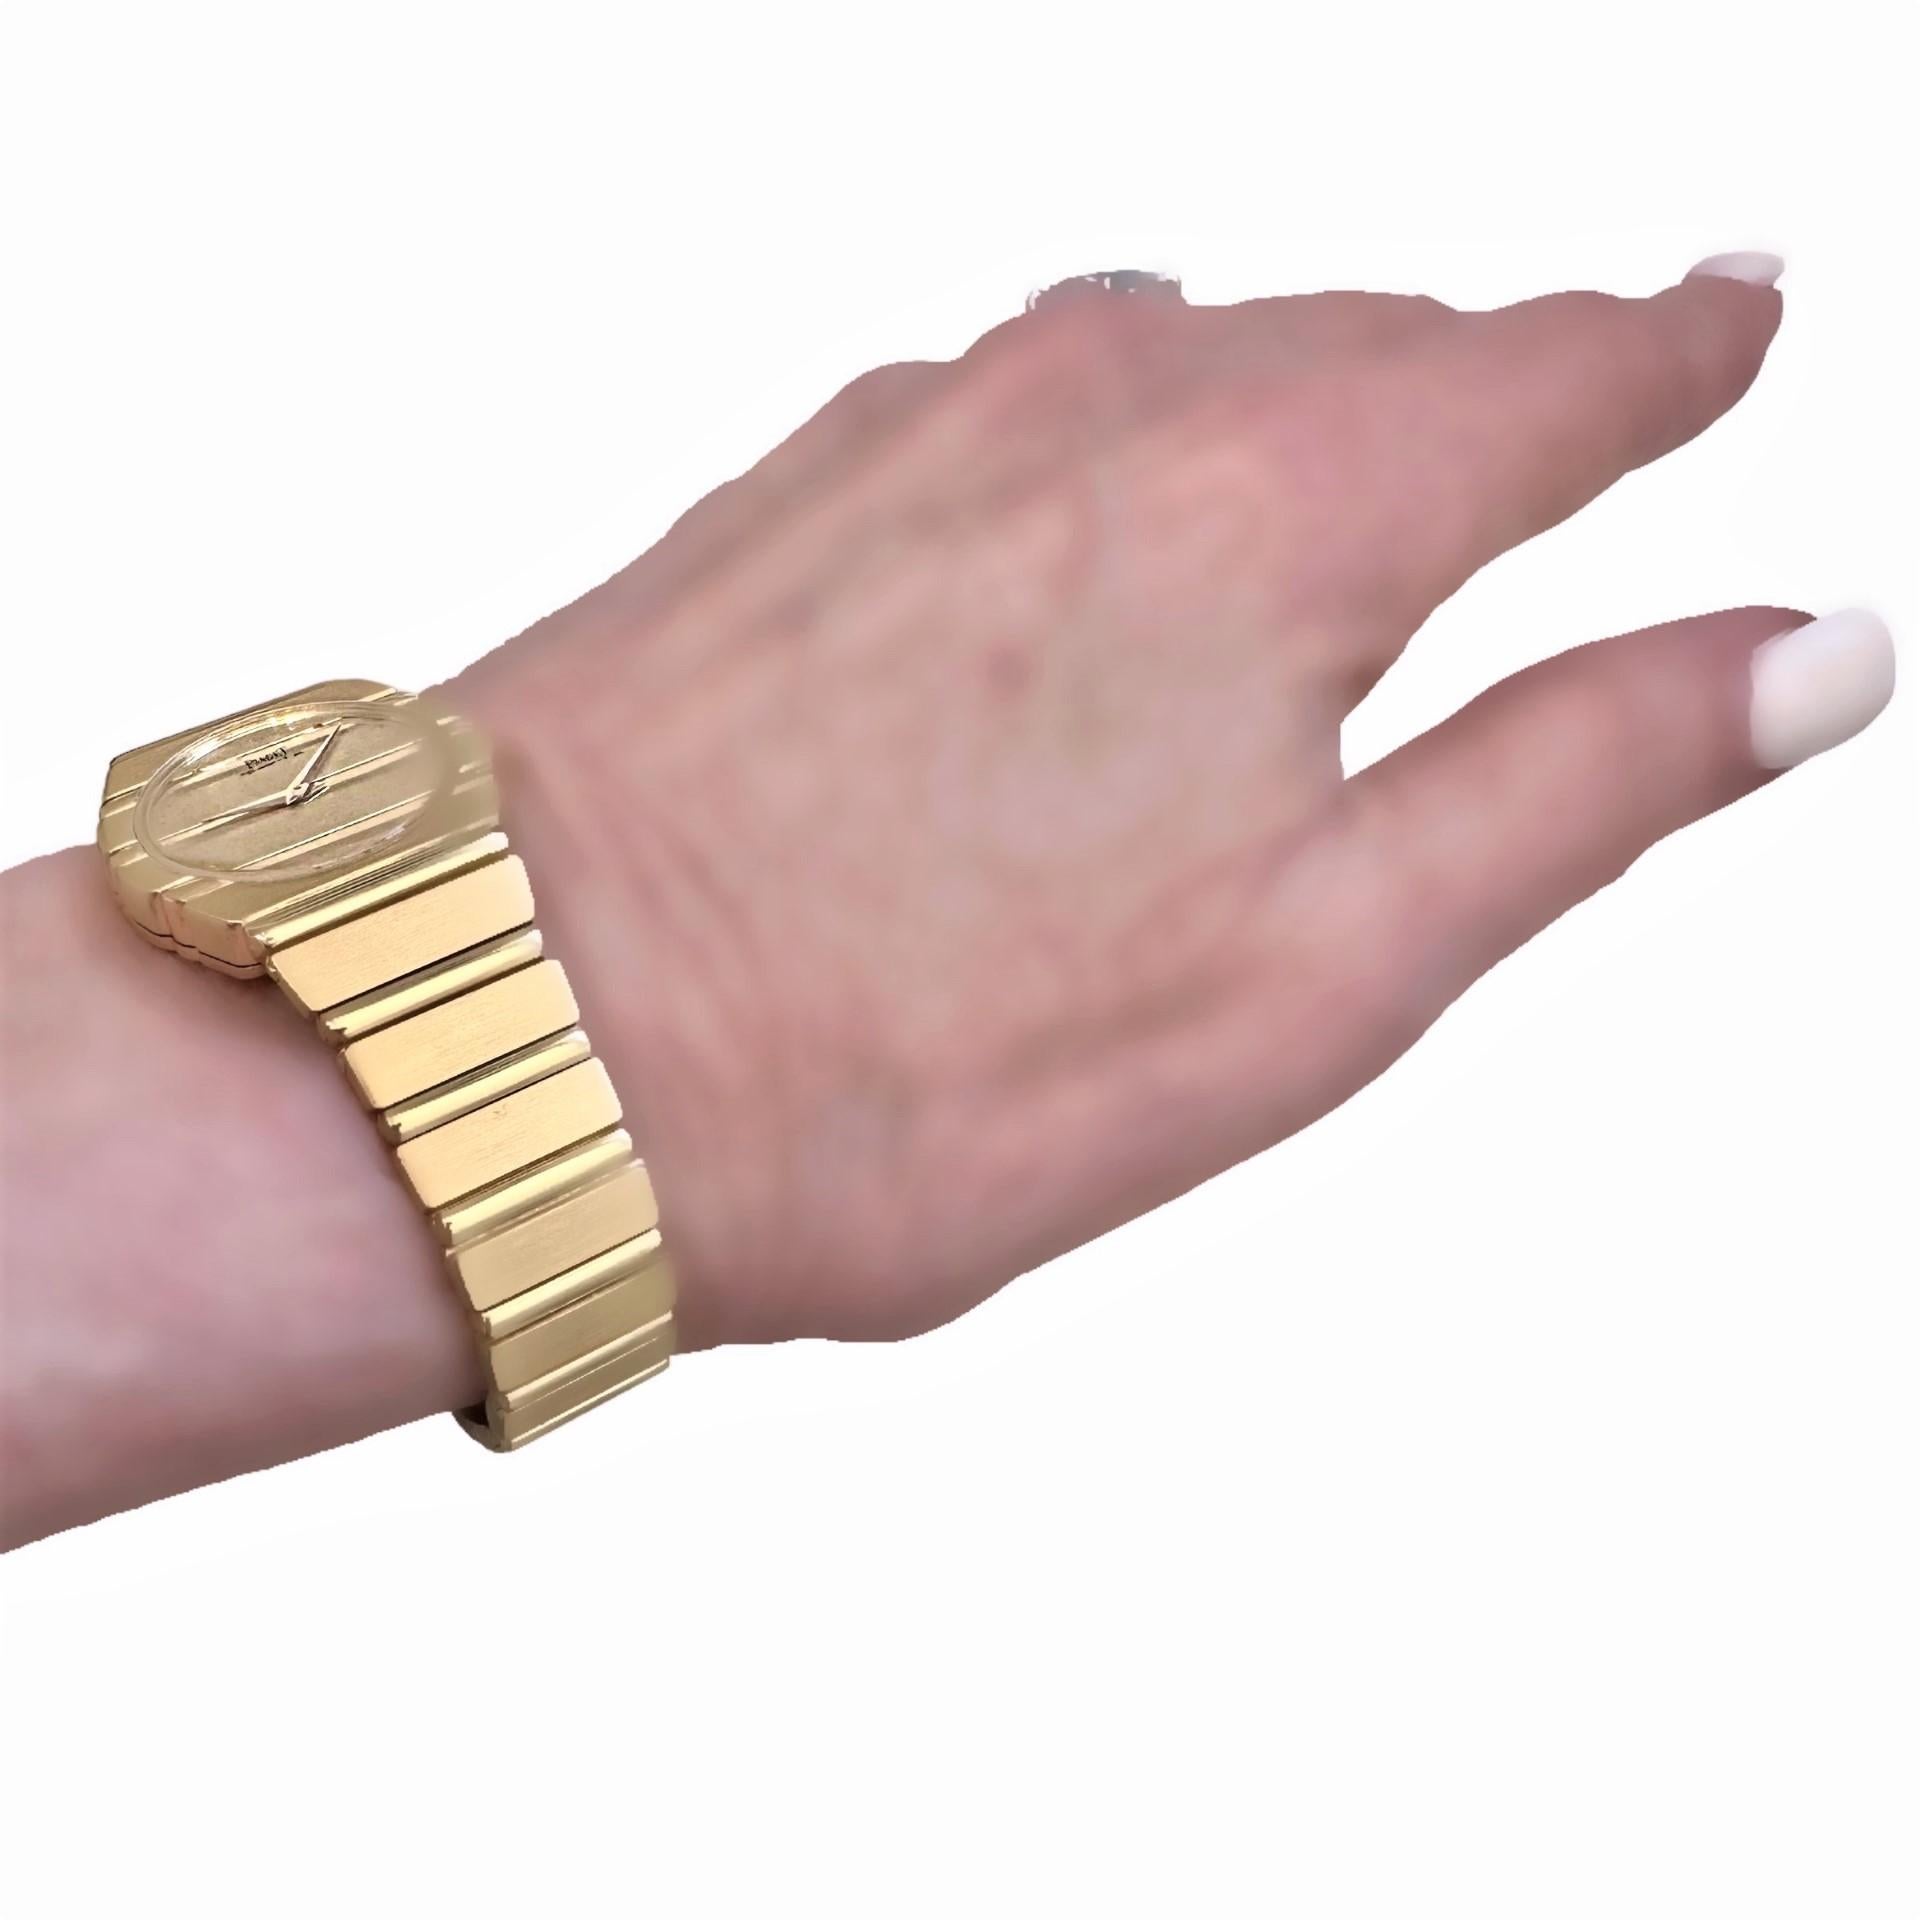 Classic Mid-size Piaget Polo Wrist Watch with Piaget Original Quartz Movement 2